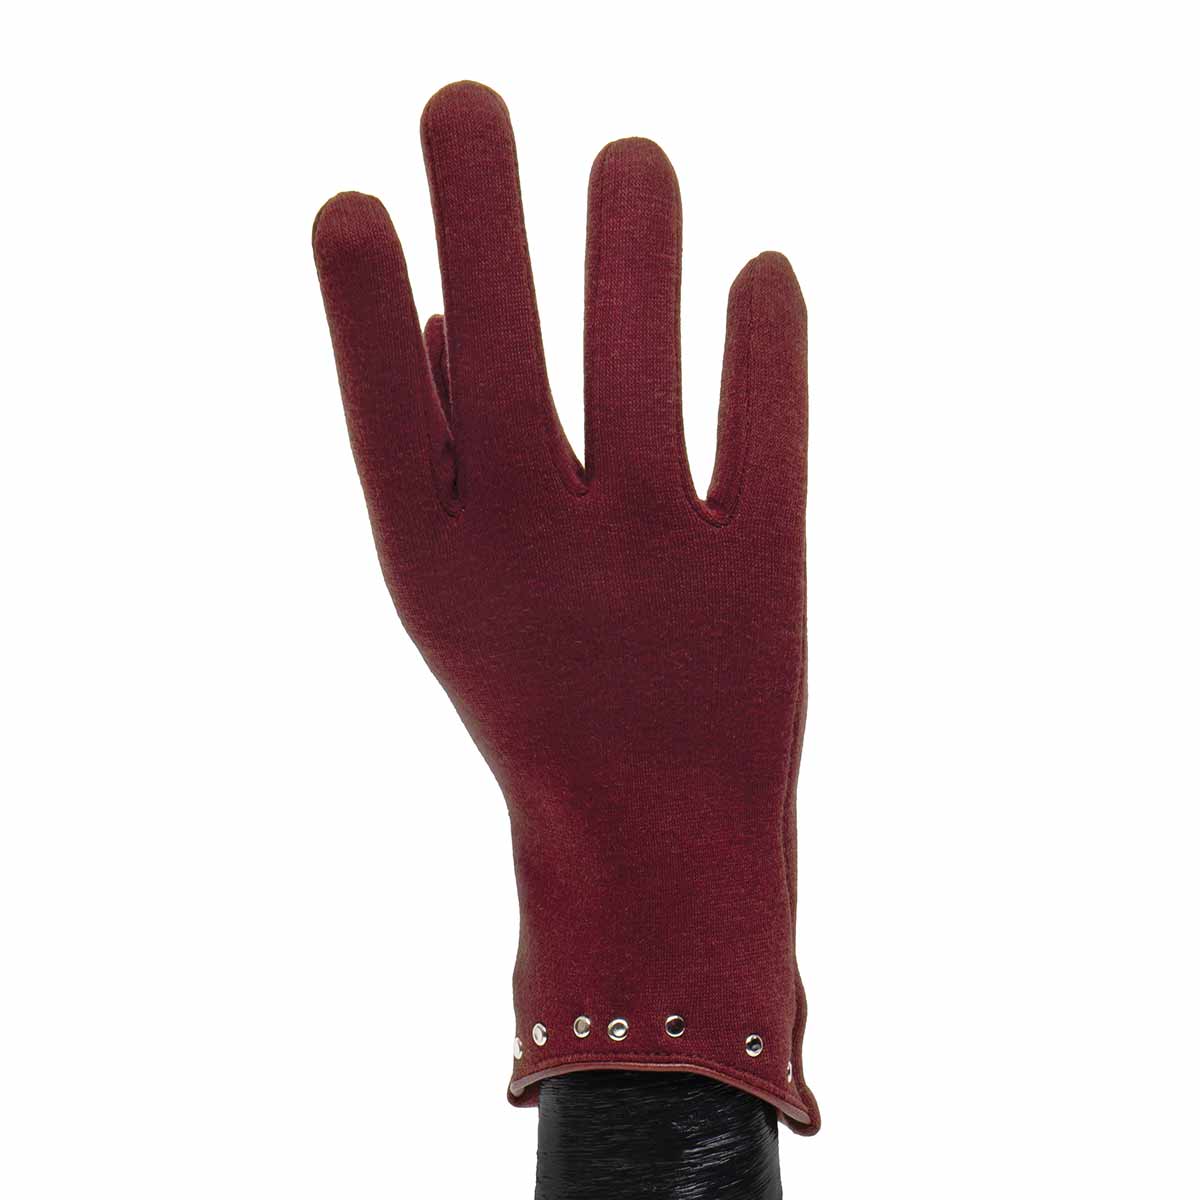 Burgundy Gloves with Stud Trim